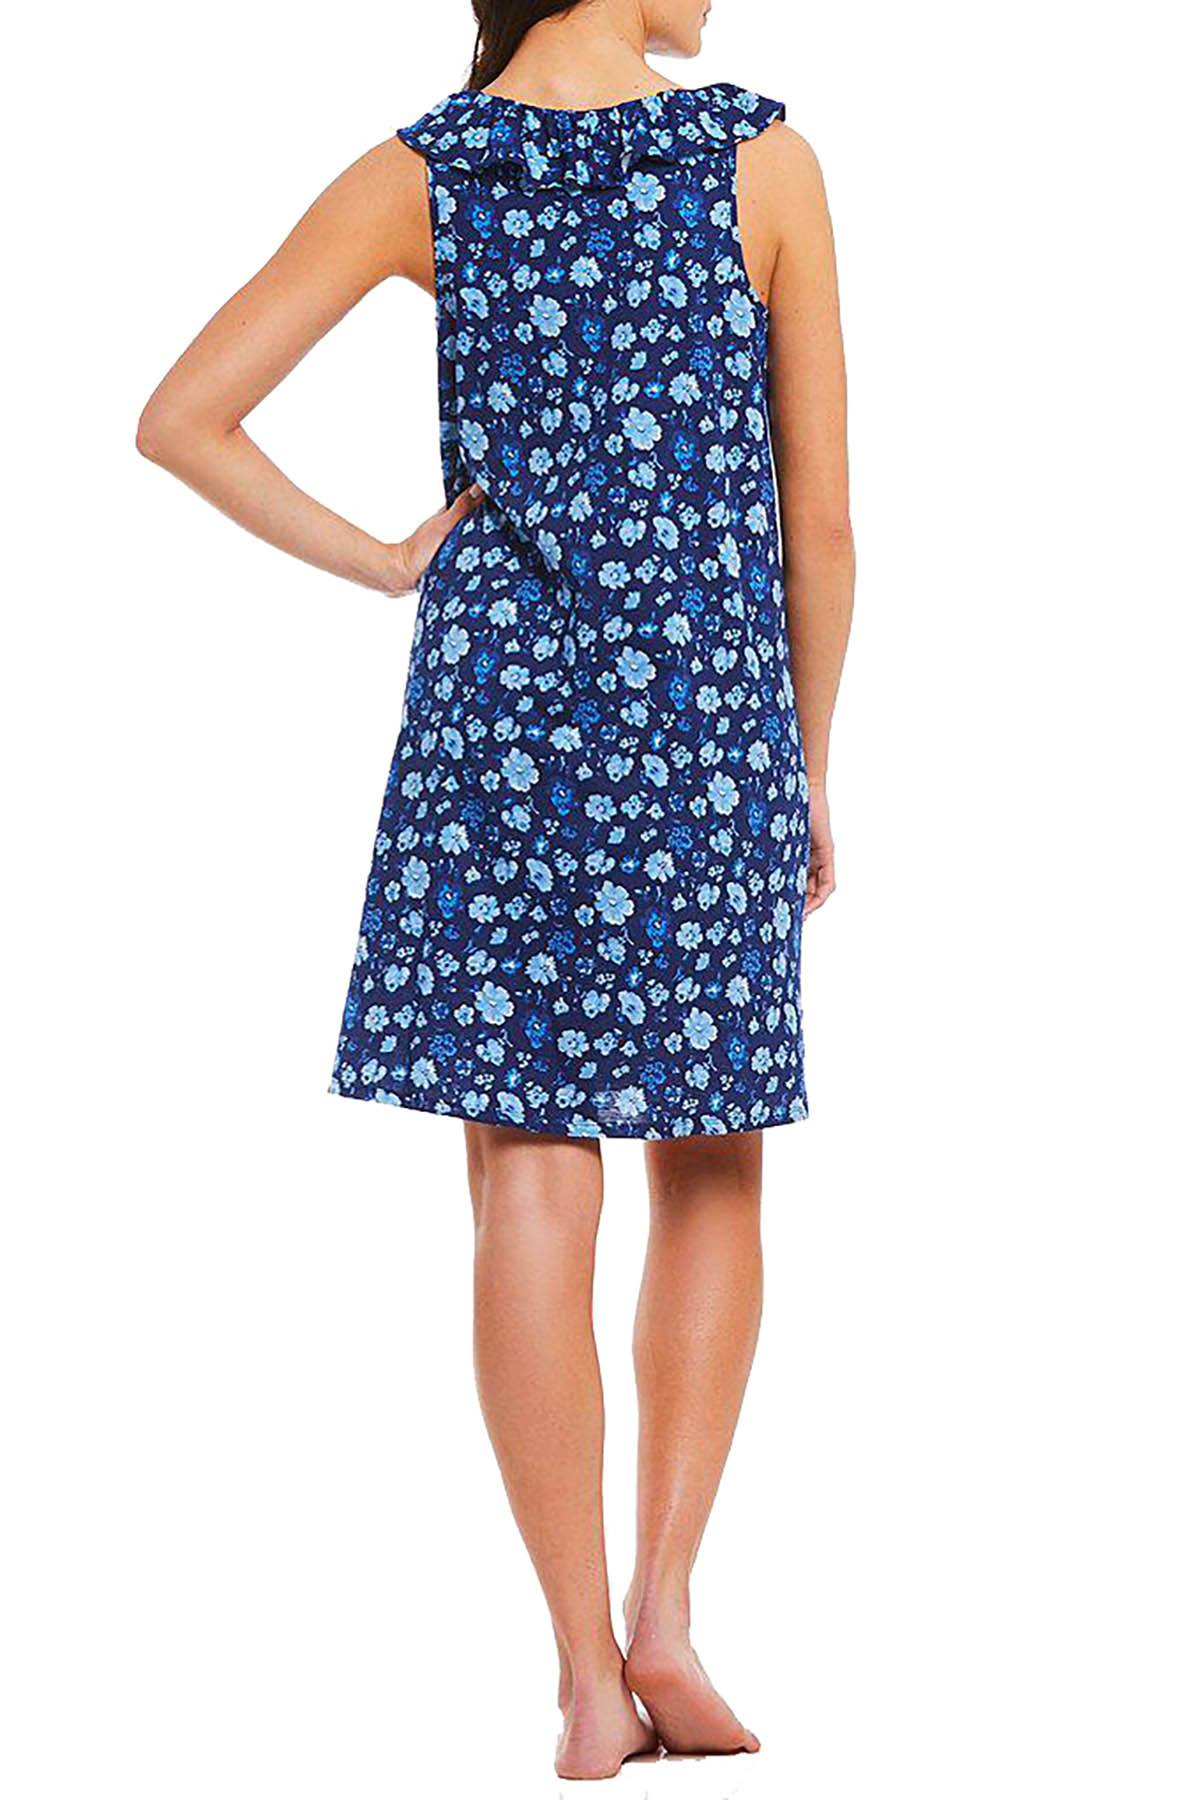 Lauren Ralph Lauren Blue Floral Short Nightgown